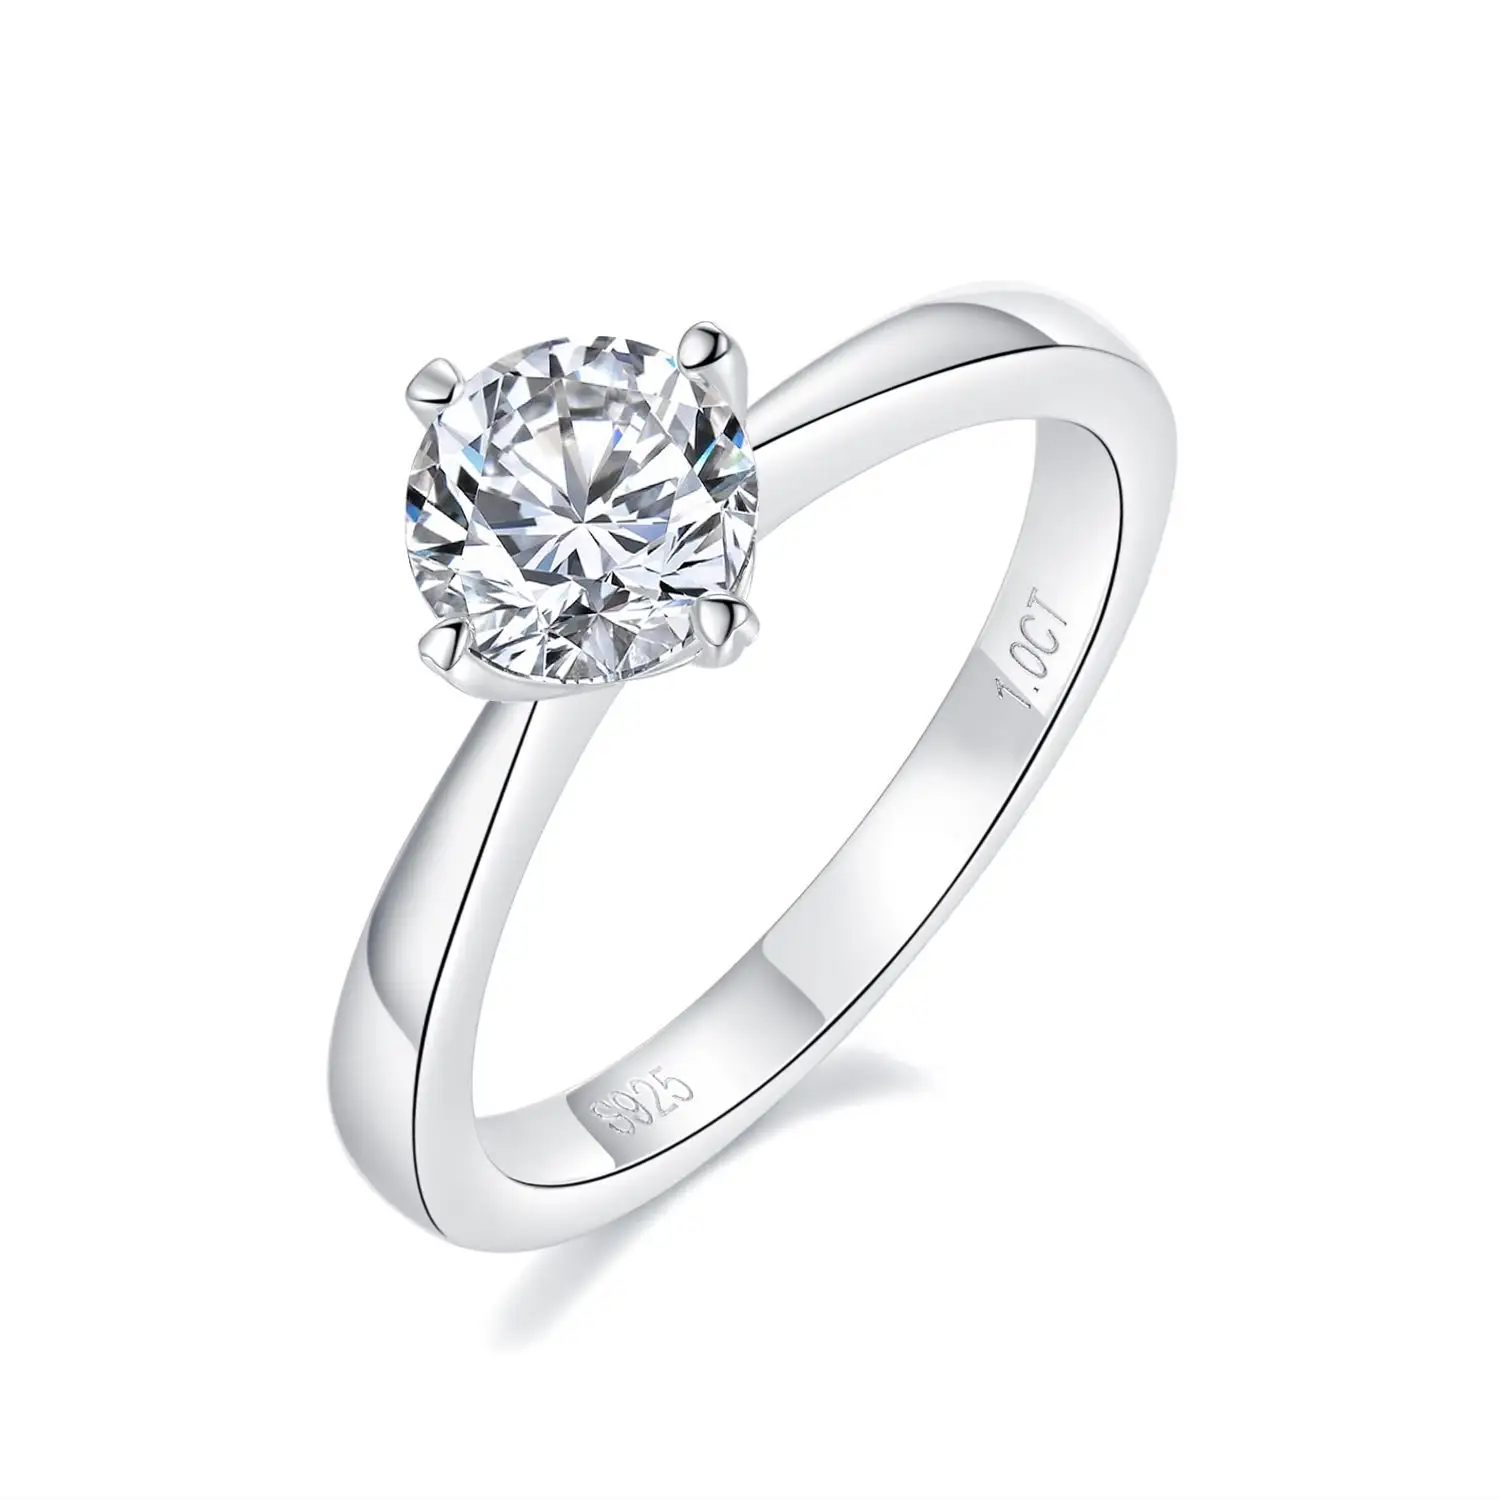 2021 Custom Personal Style Ringe Schmuck 14 Karat massiv vergoldet mit Moissan ite Diamond Trau ringe Paar